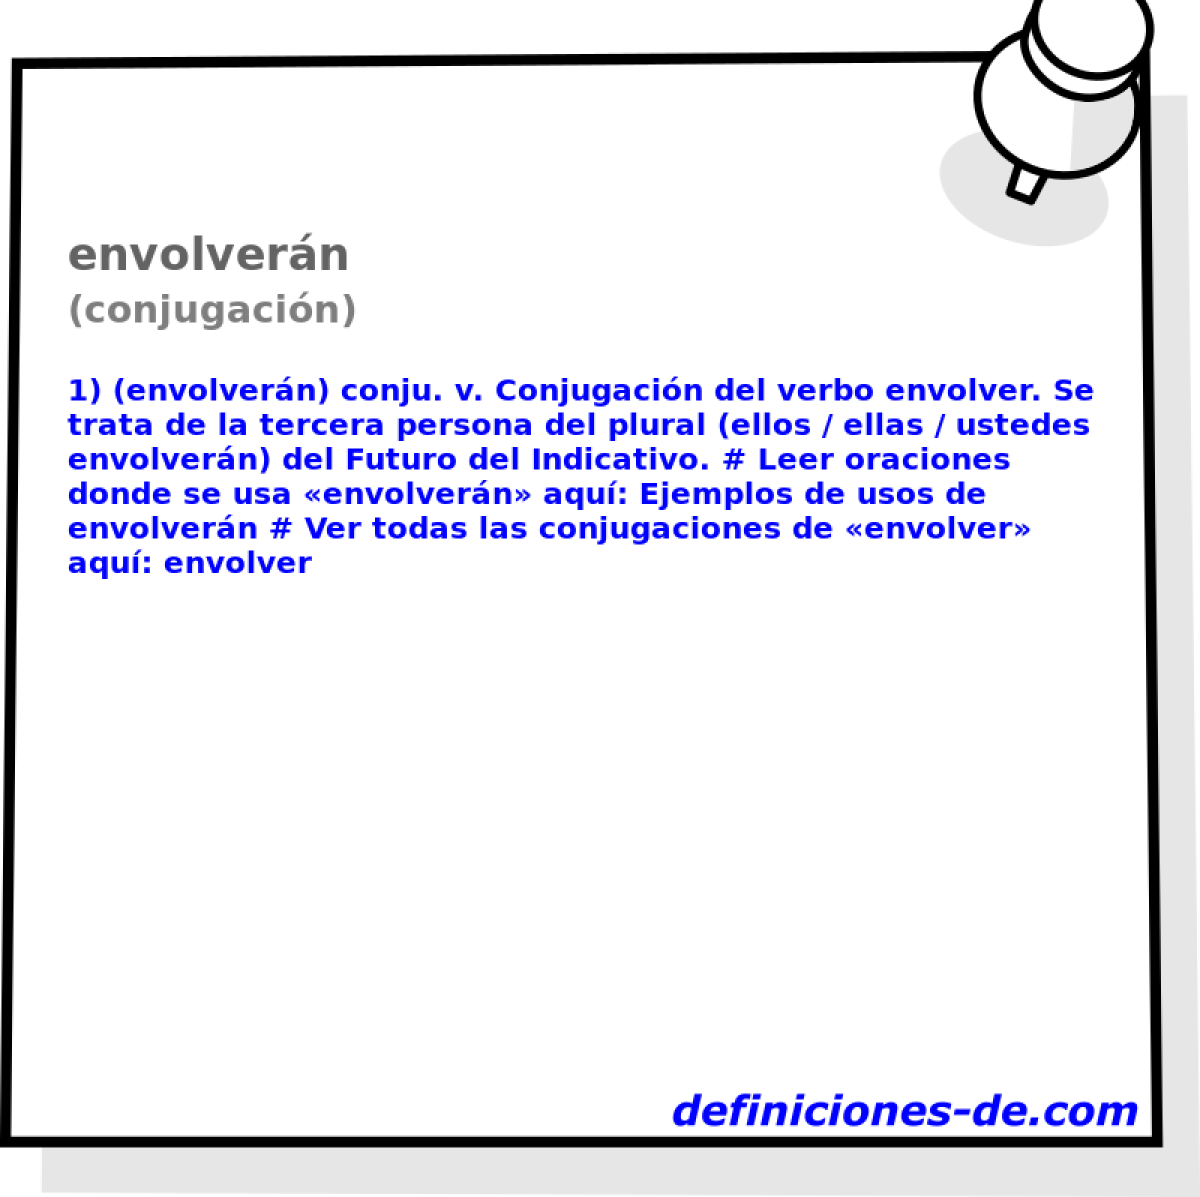 envolvern (conjugacin)